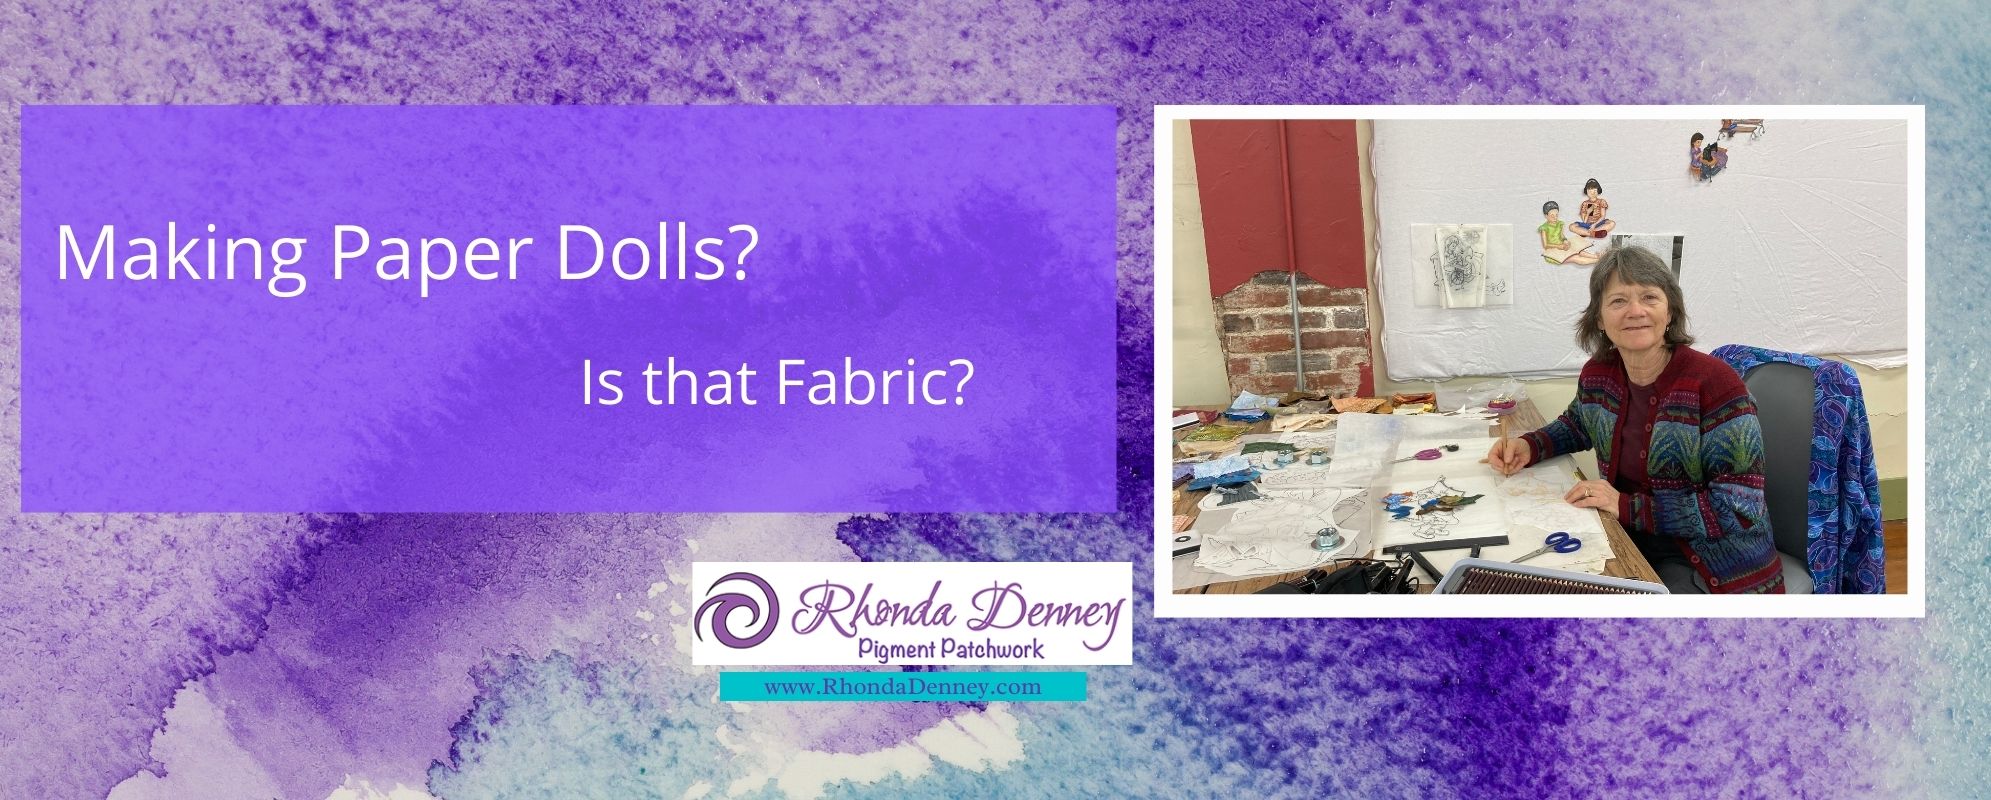 Rhonda Denney - Making Paper Dolls? Is that Fabric?